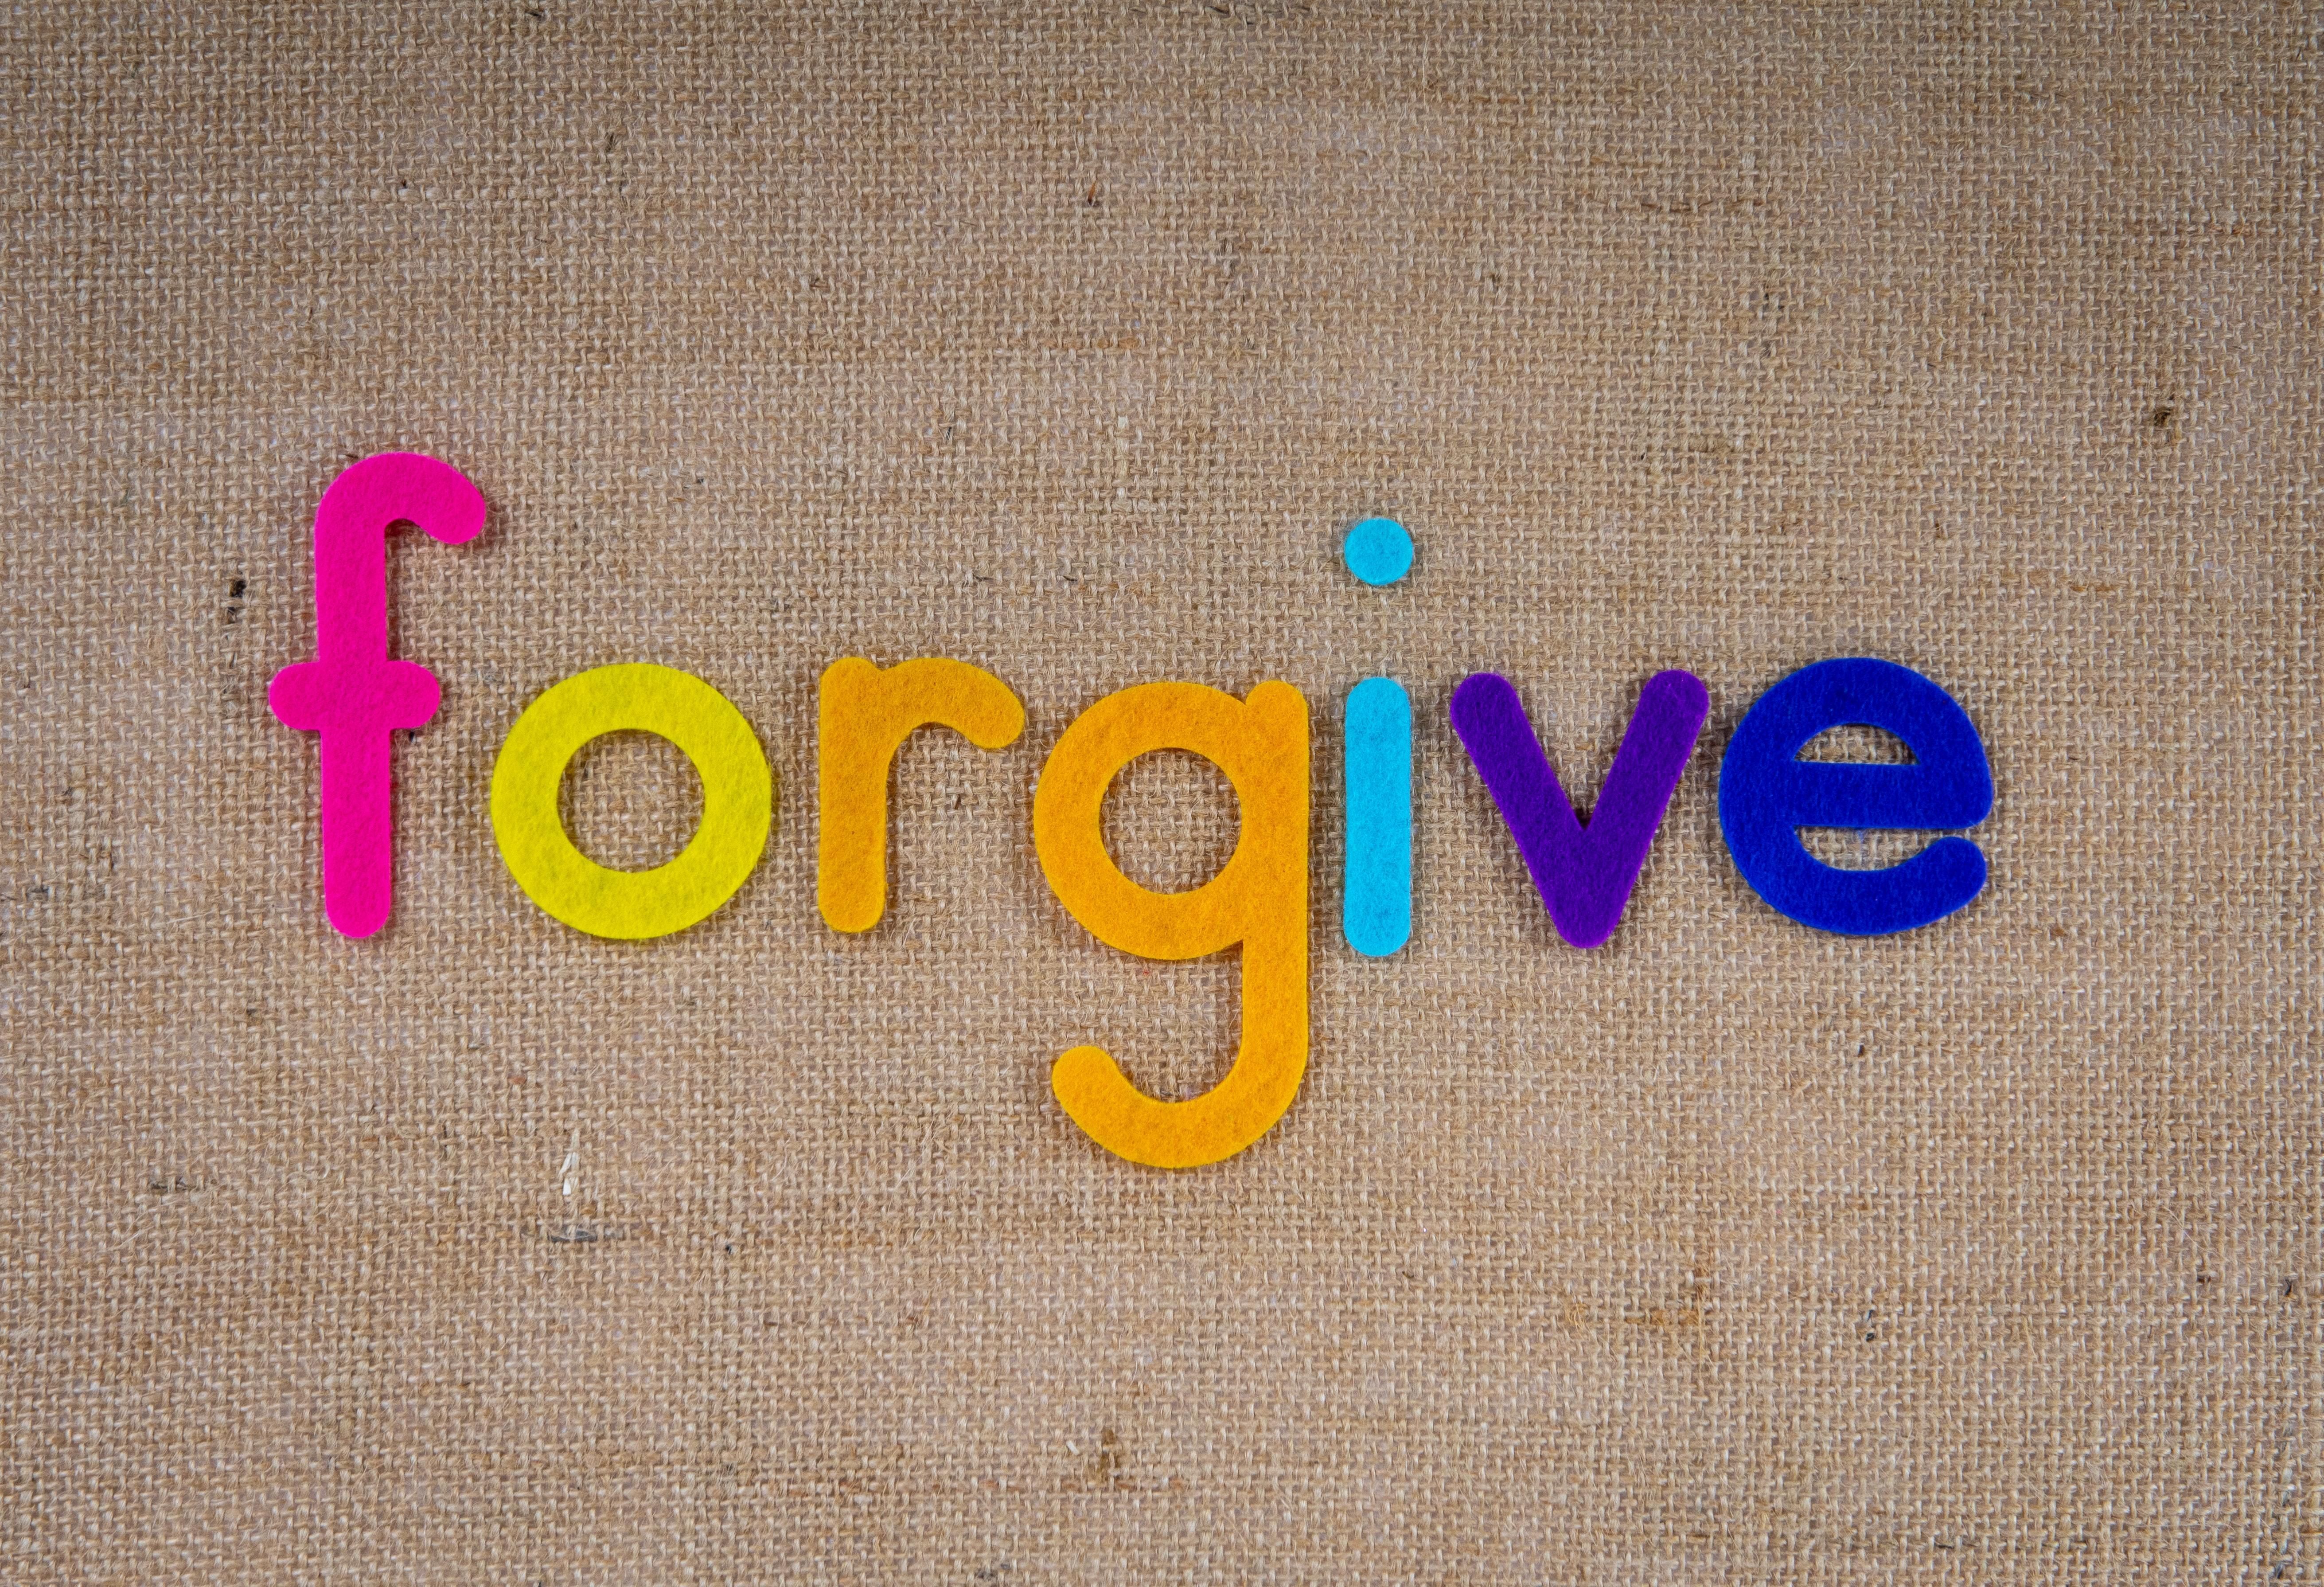 Forgiving Yourself